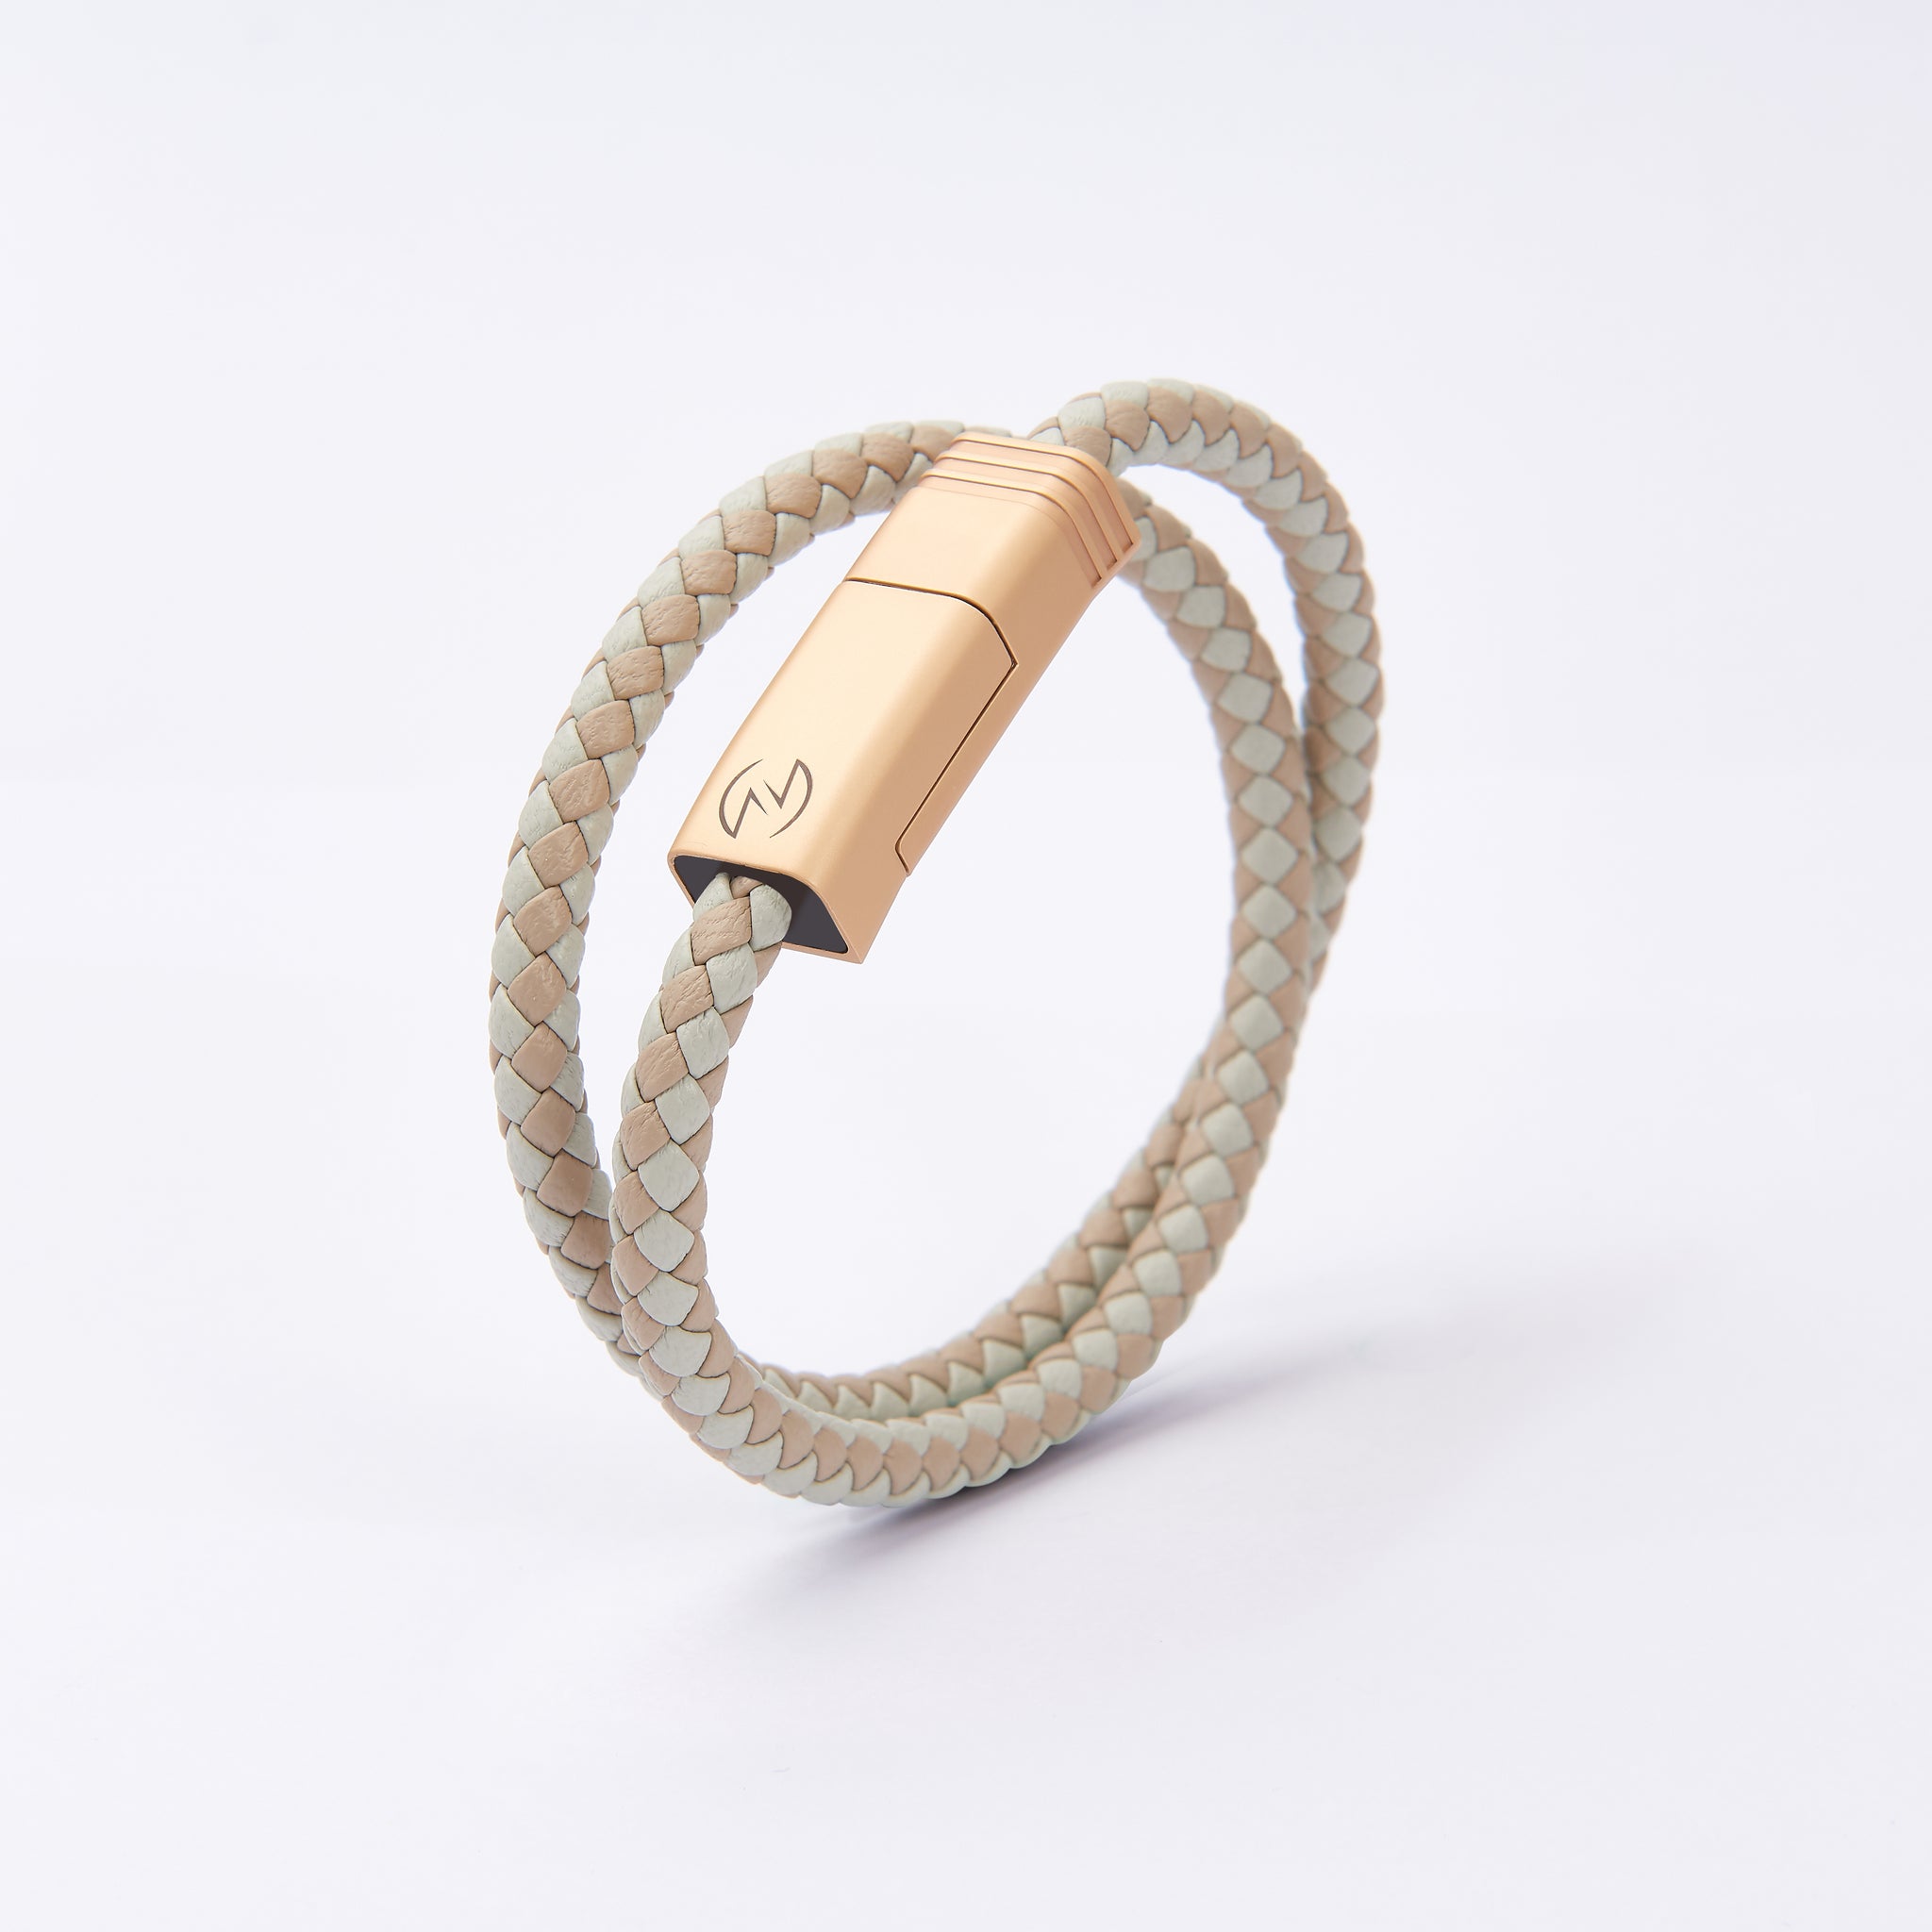 Braided Bracelet Wrist Lightning Cable Data Bracelet Charging Cord For  Apple Phone,genuine Leather Bracelet Charger Cuff Usb - Bracelets -  AliExpress